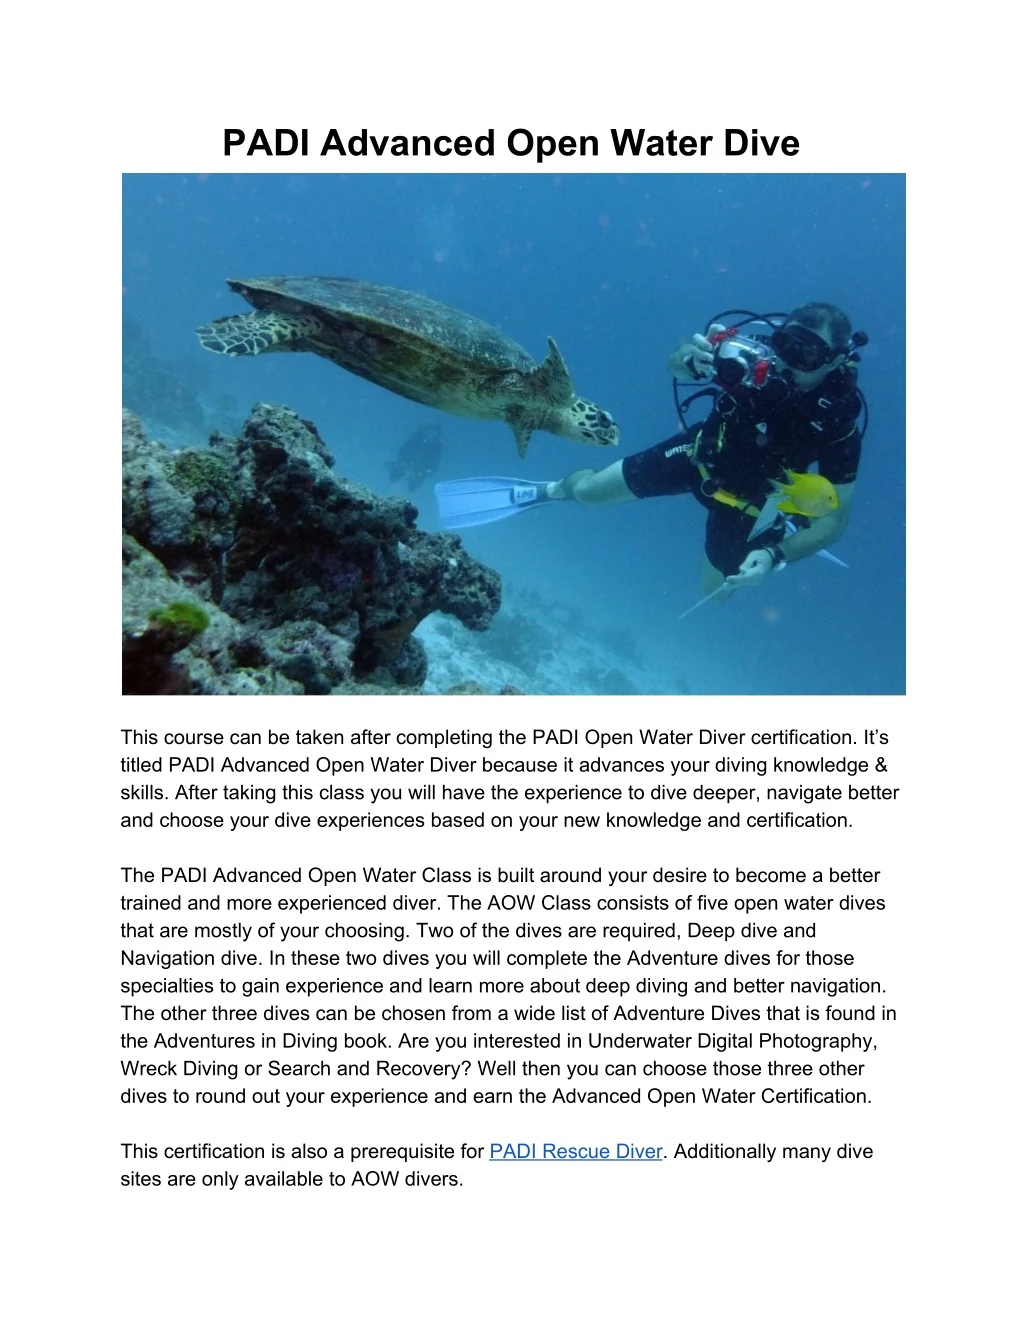 padi advanced open water dive